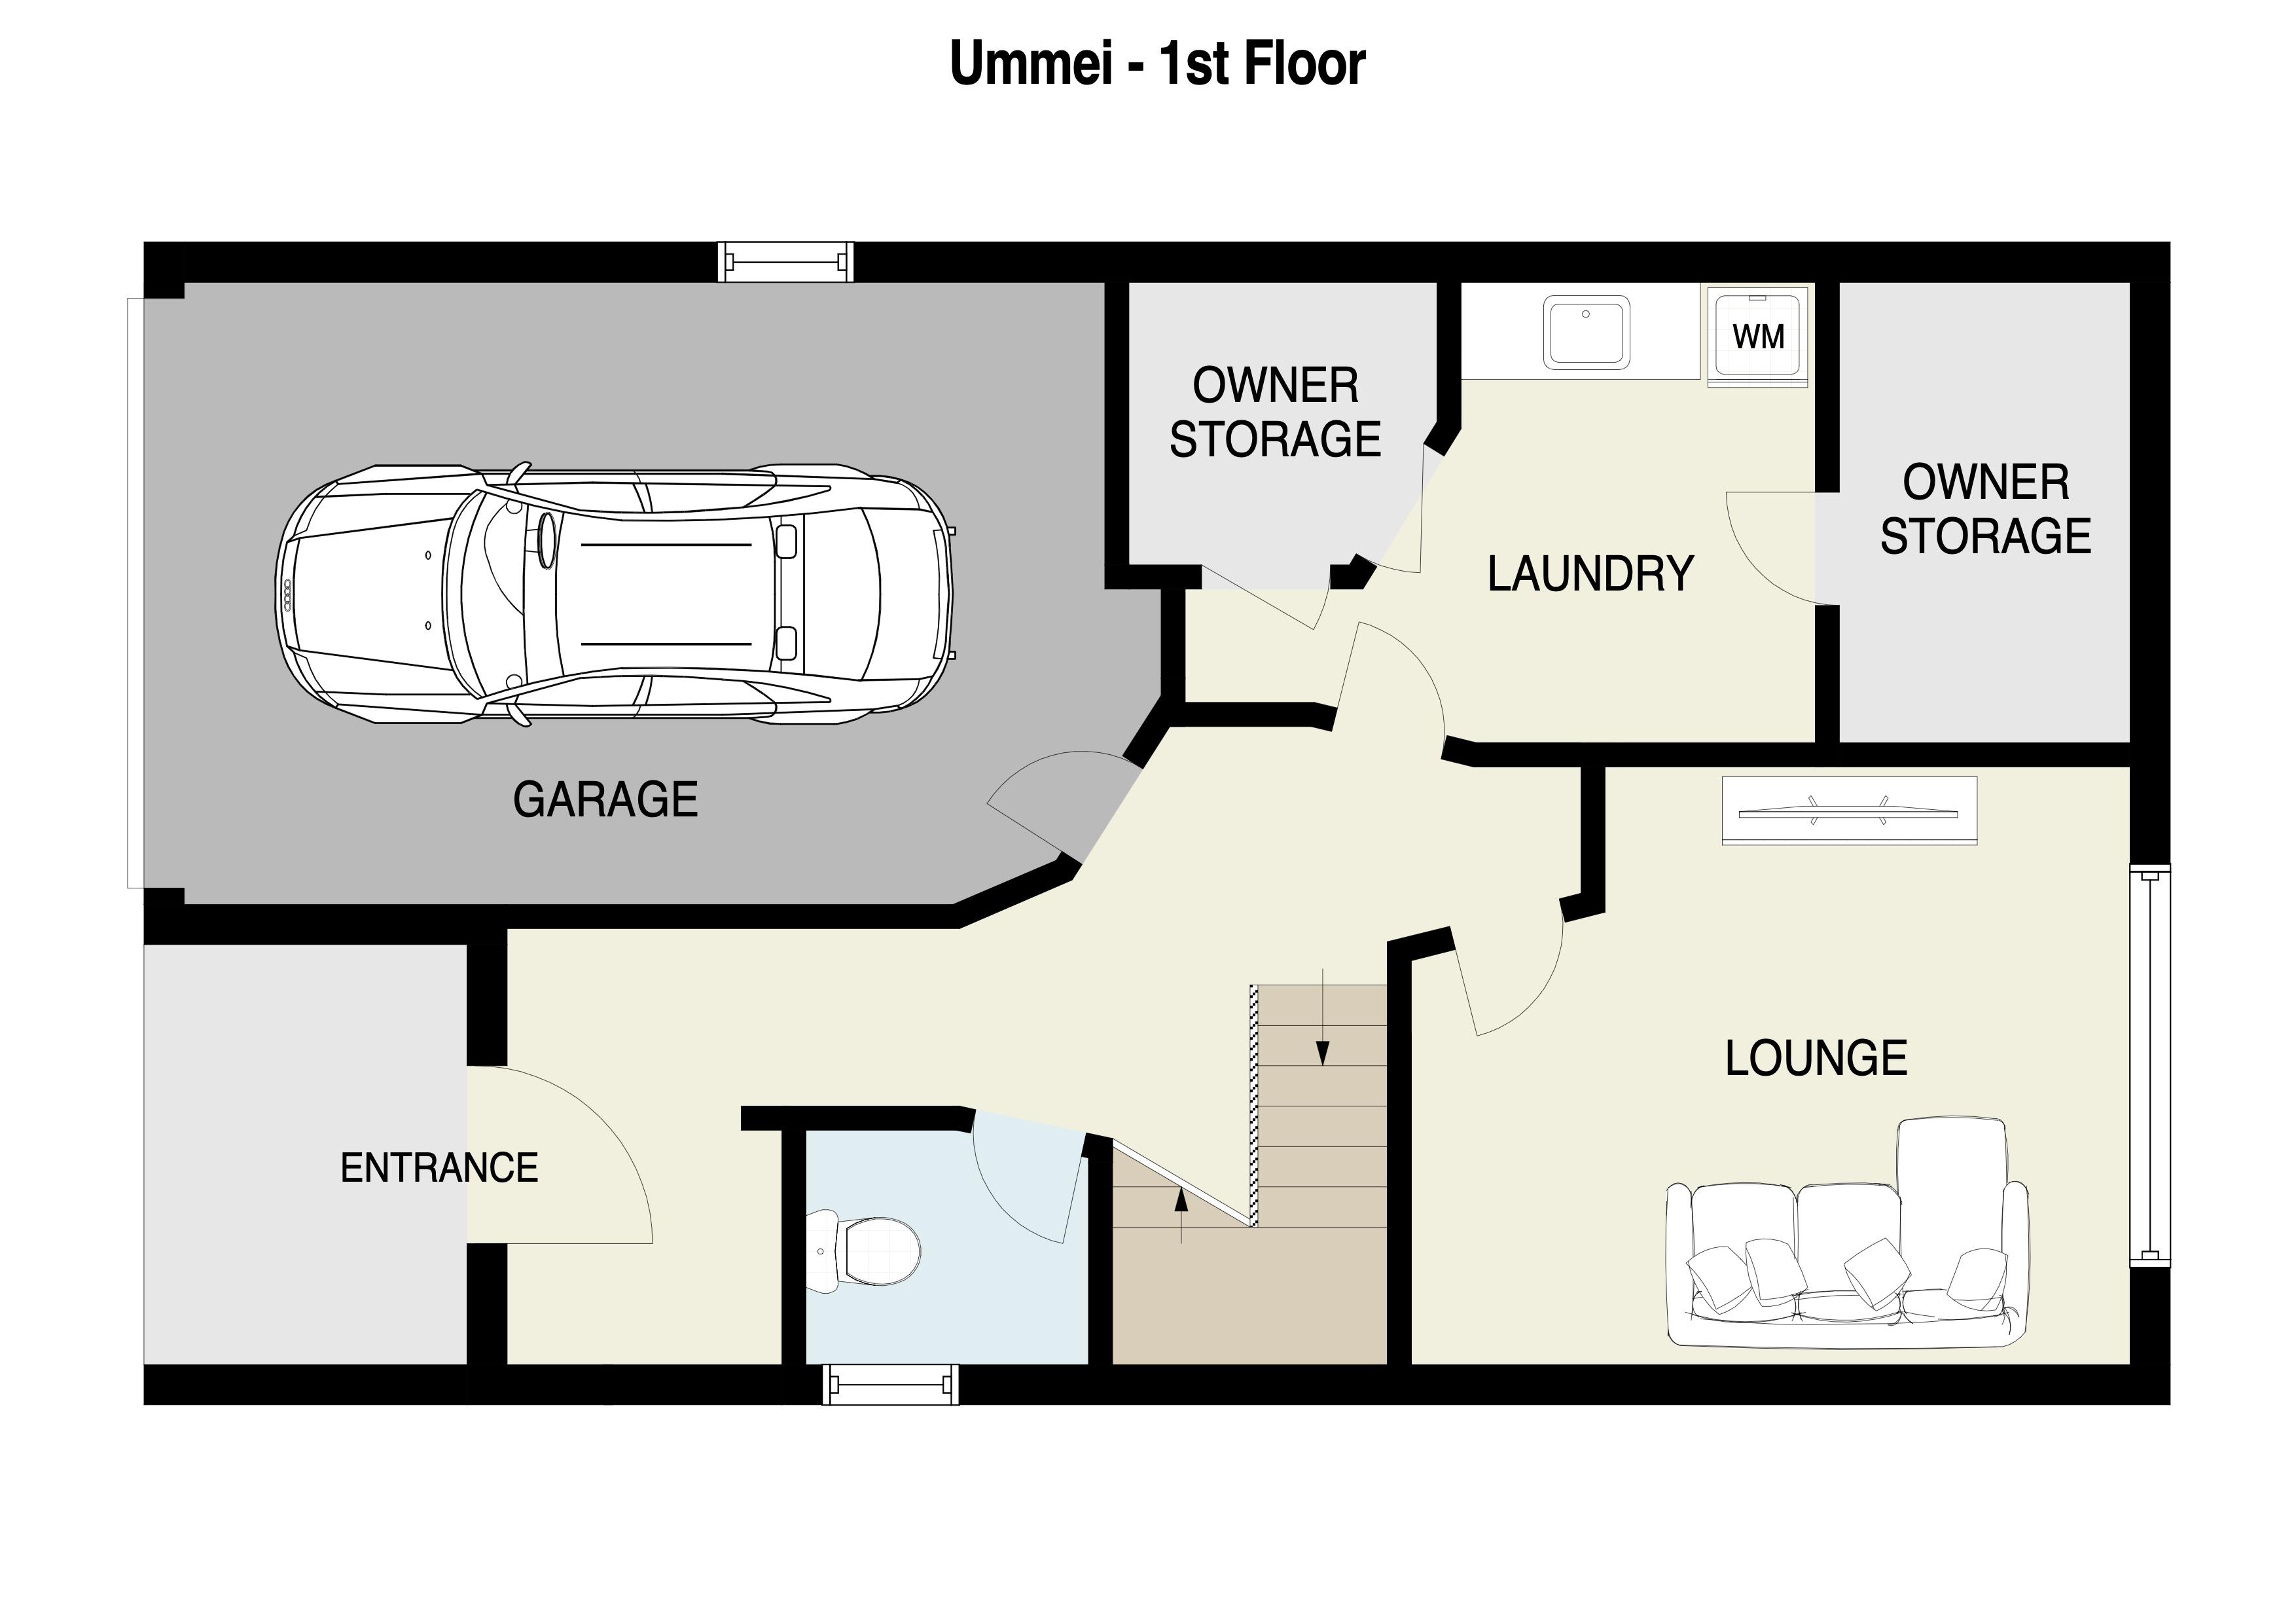 Ummei 1st Floor Plan